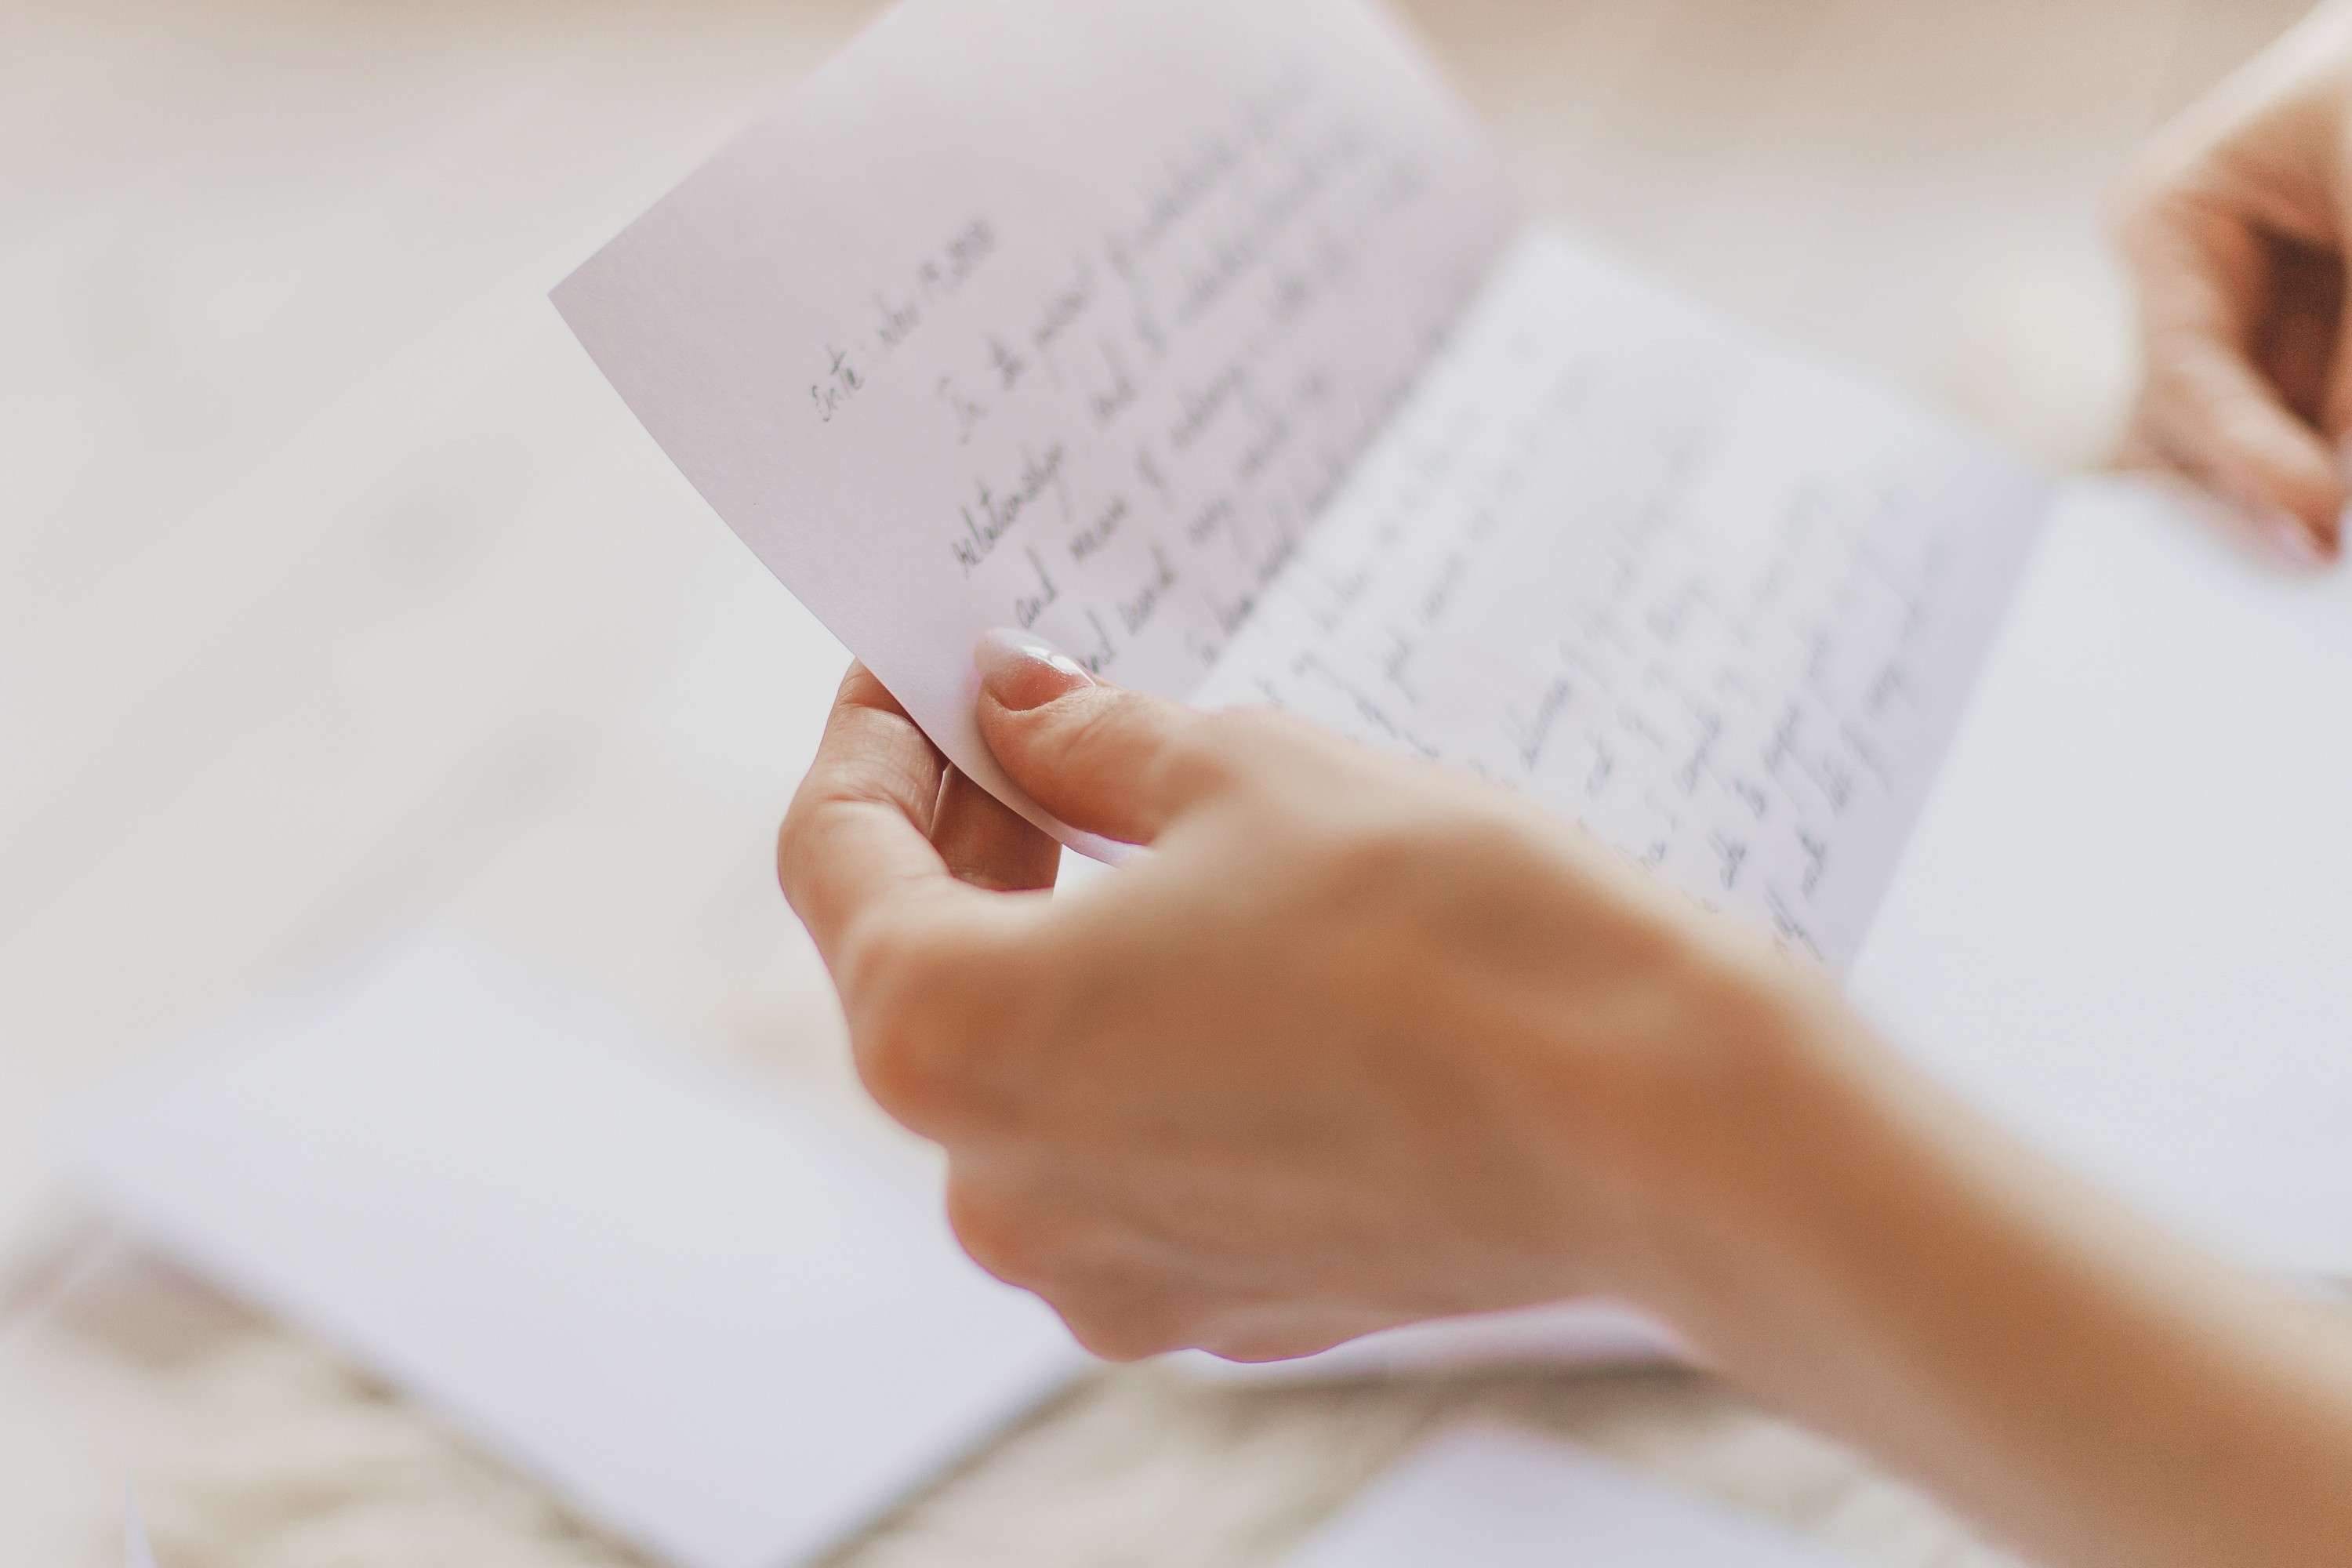 Hands of young woman holding handwritten letter. | Source: Shutterstock